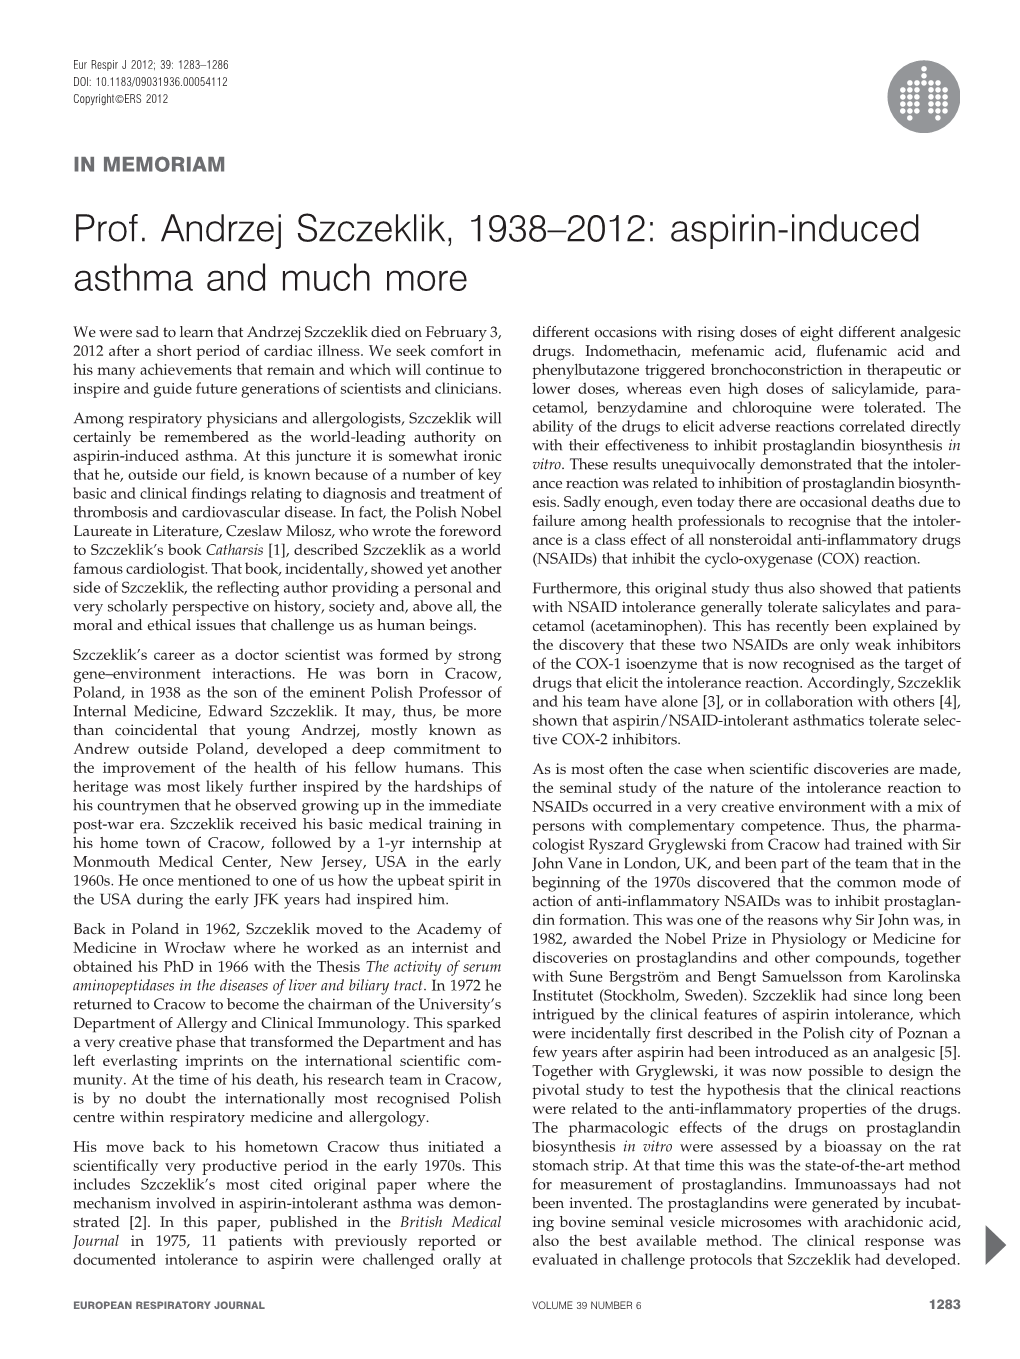 Prof. Andrzej Szczeklik, 1938–2012: Aspirin-Induced Asthma and Much More